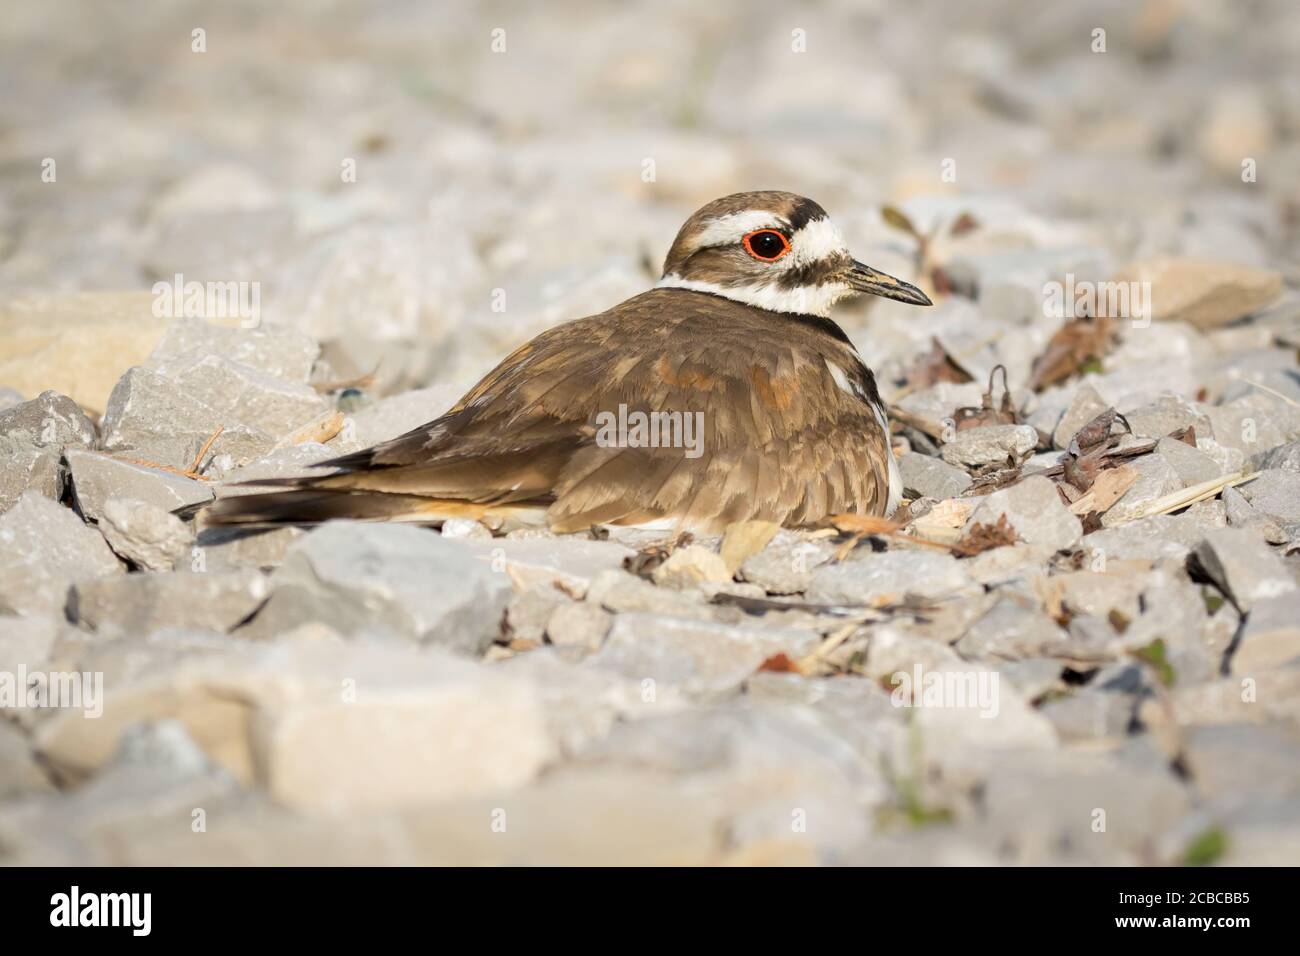 Camouflaged Killdeer protecting its nest on gravel Stock Photo